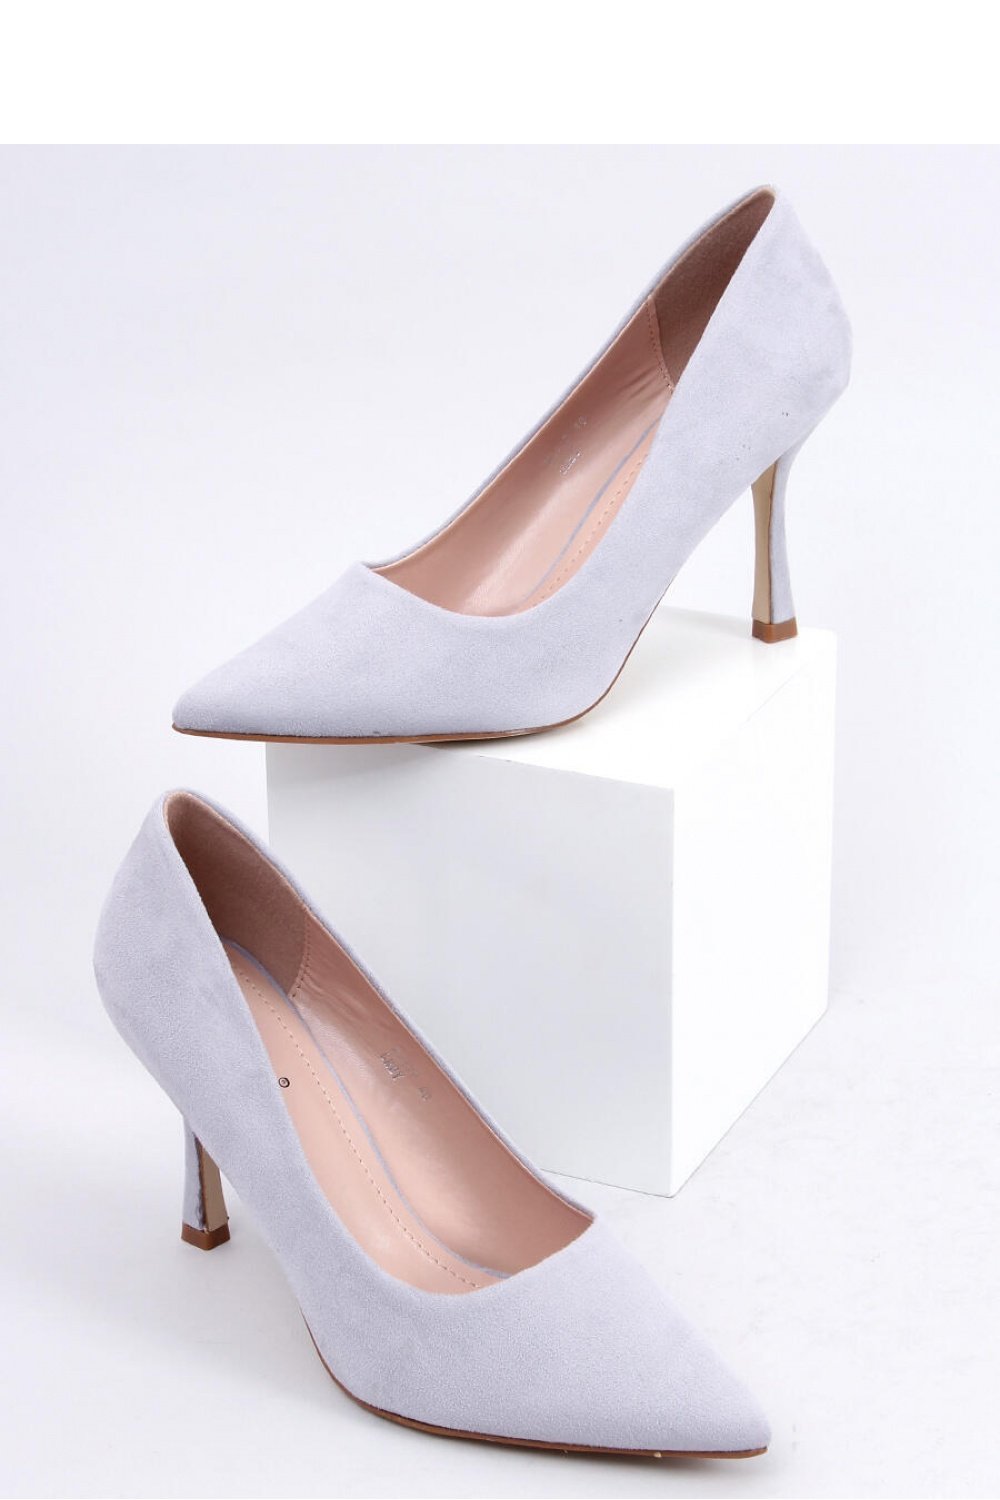 High heels model 171411 Inello Posh Styles Apparel